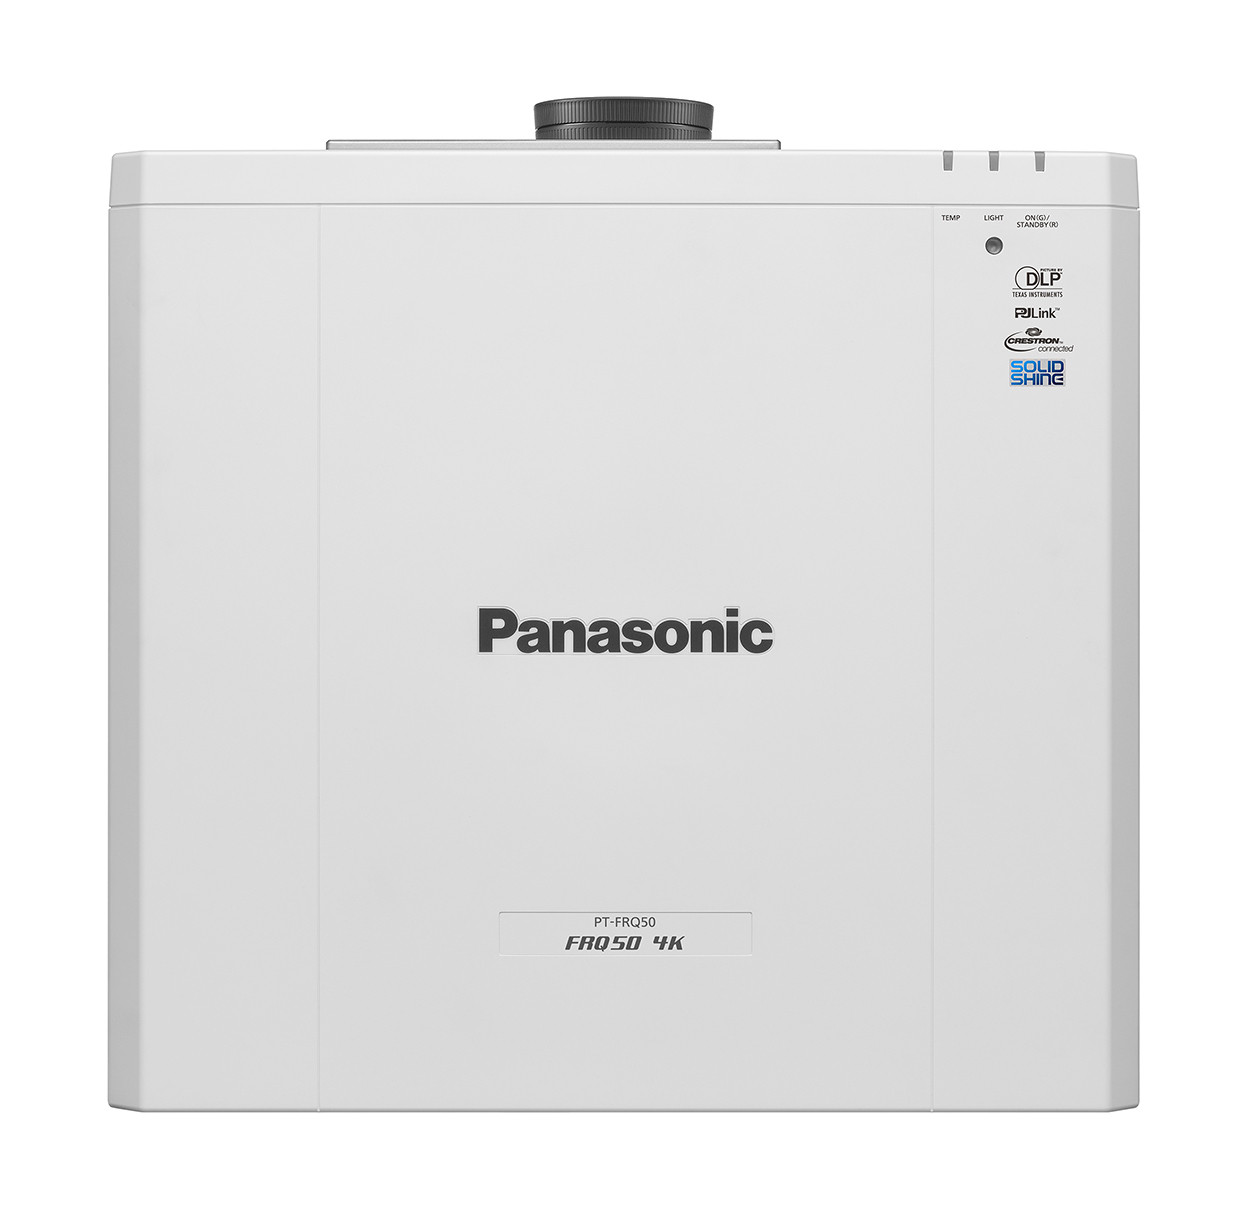 Panasonic-PT-FRQ50-wit-Demo